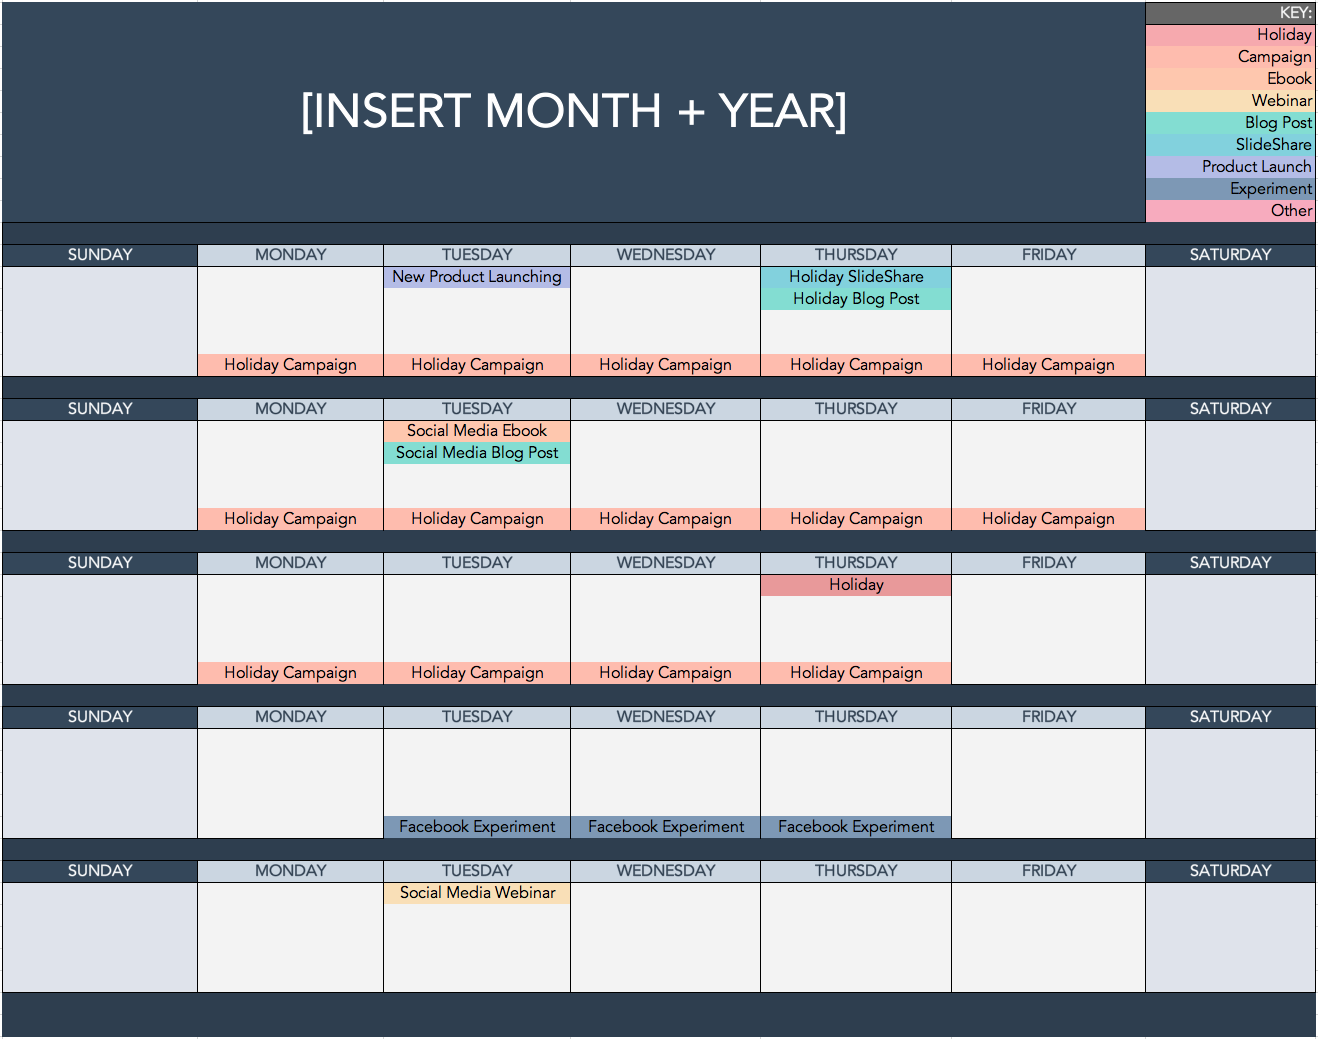 Planning Calendars Templates SampleTemplatess SampleTemplatess